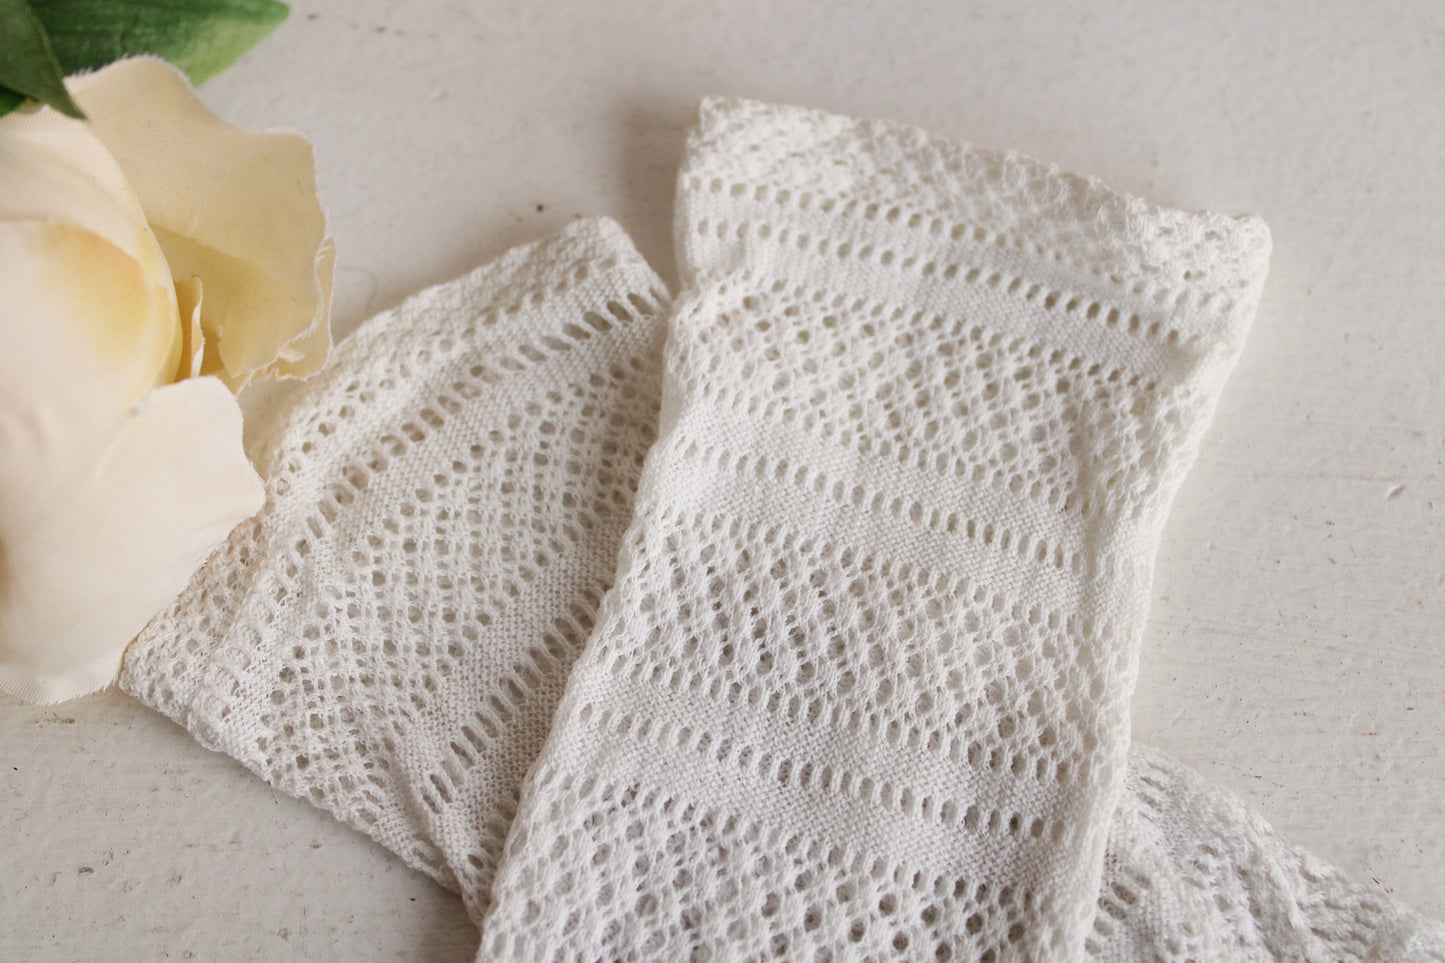 Antique White Lace Gloves